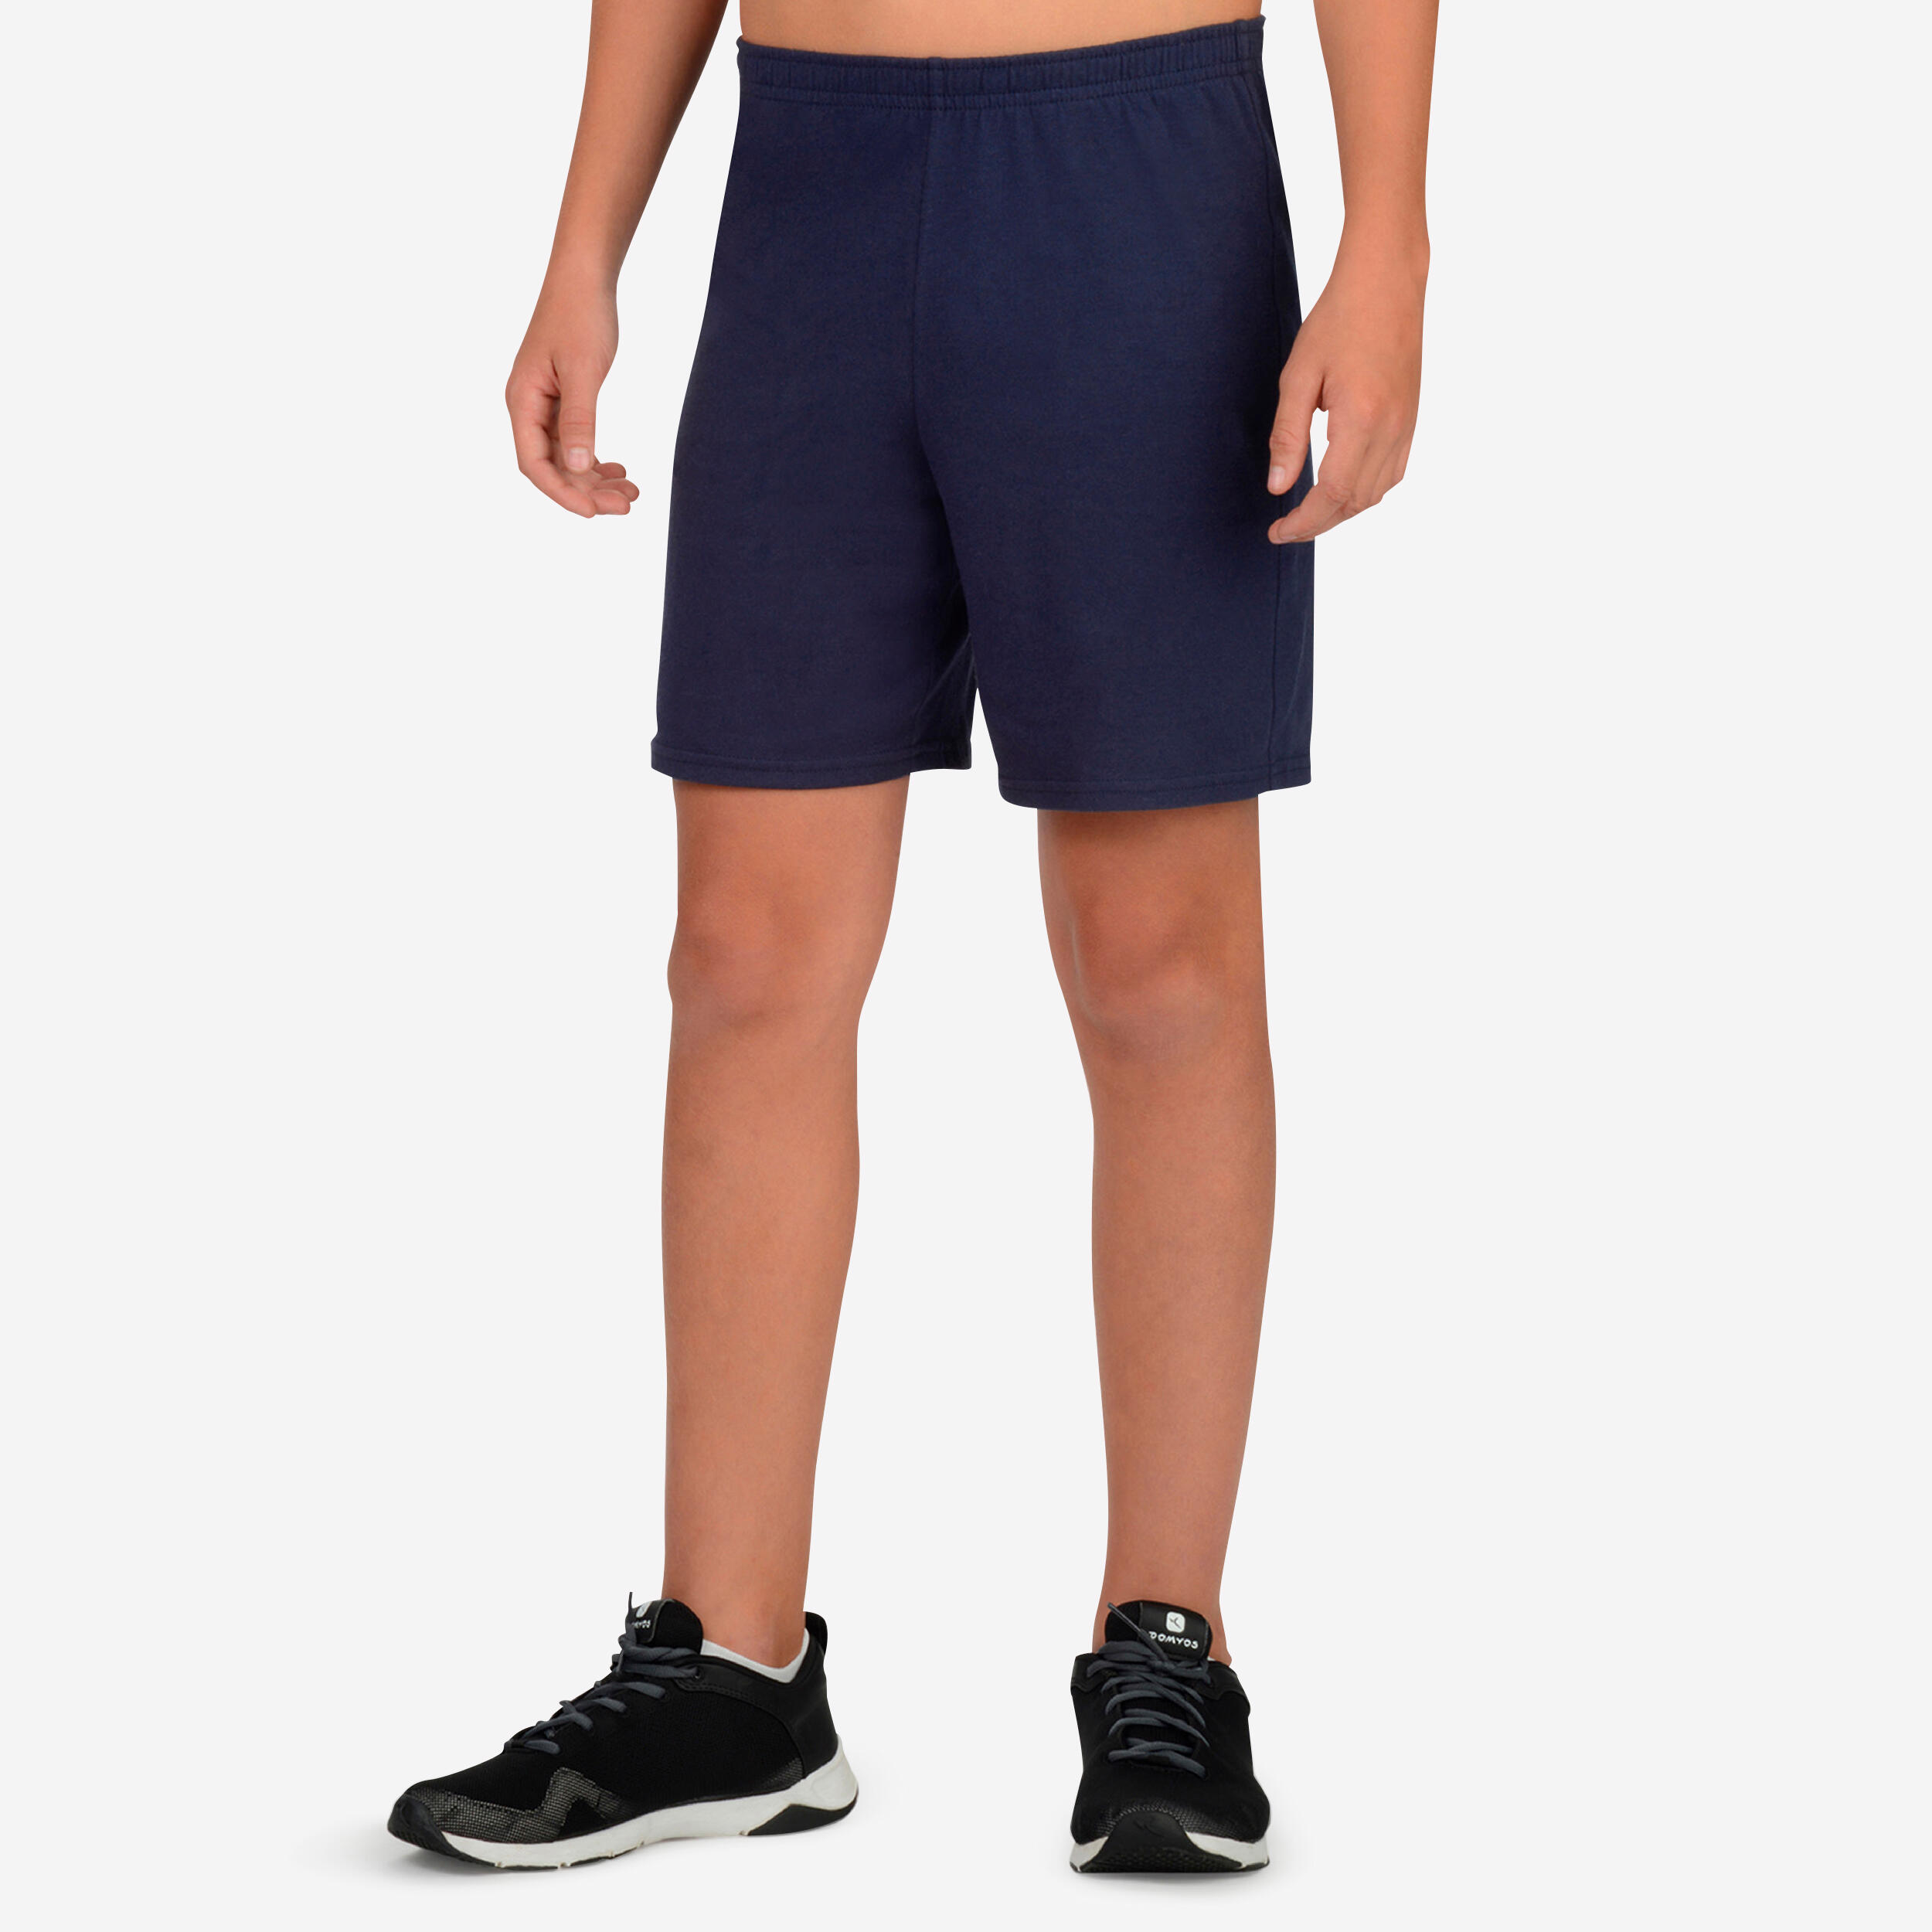 Kids' Jogging Pants - Navy - Navy blue - Domyos - Decathlon